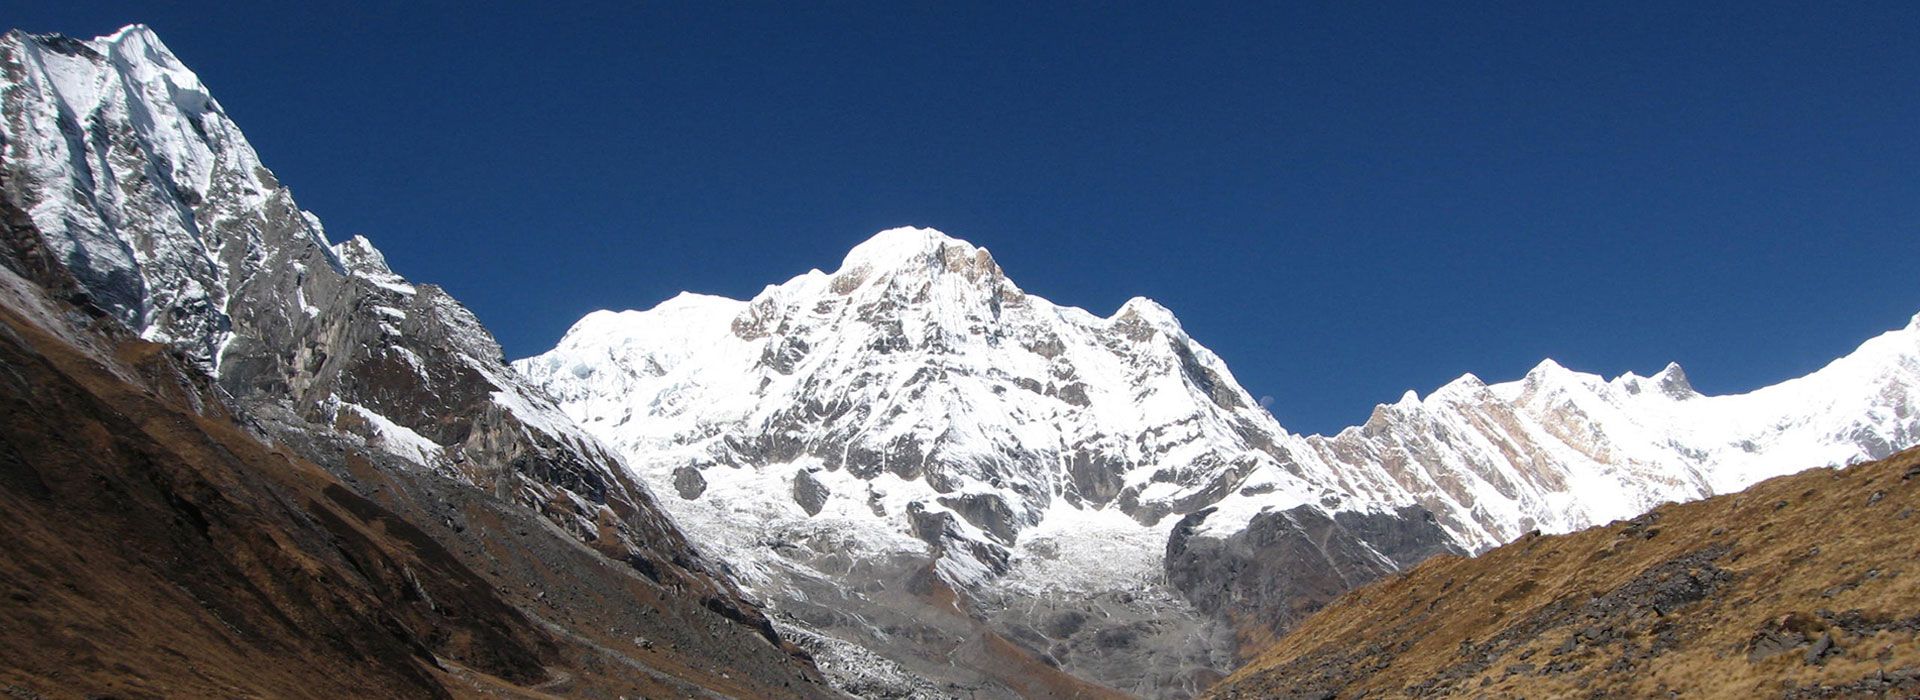 Annapurna view from Annapurna Base Camp 